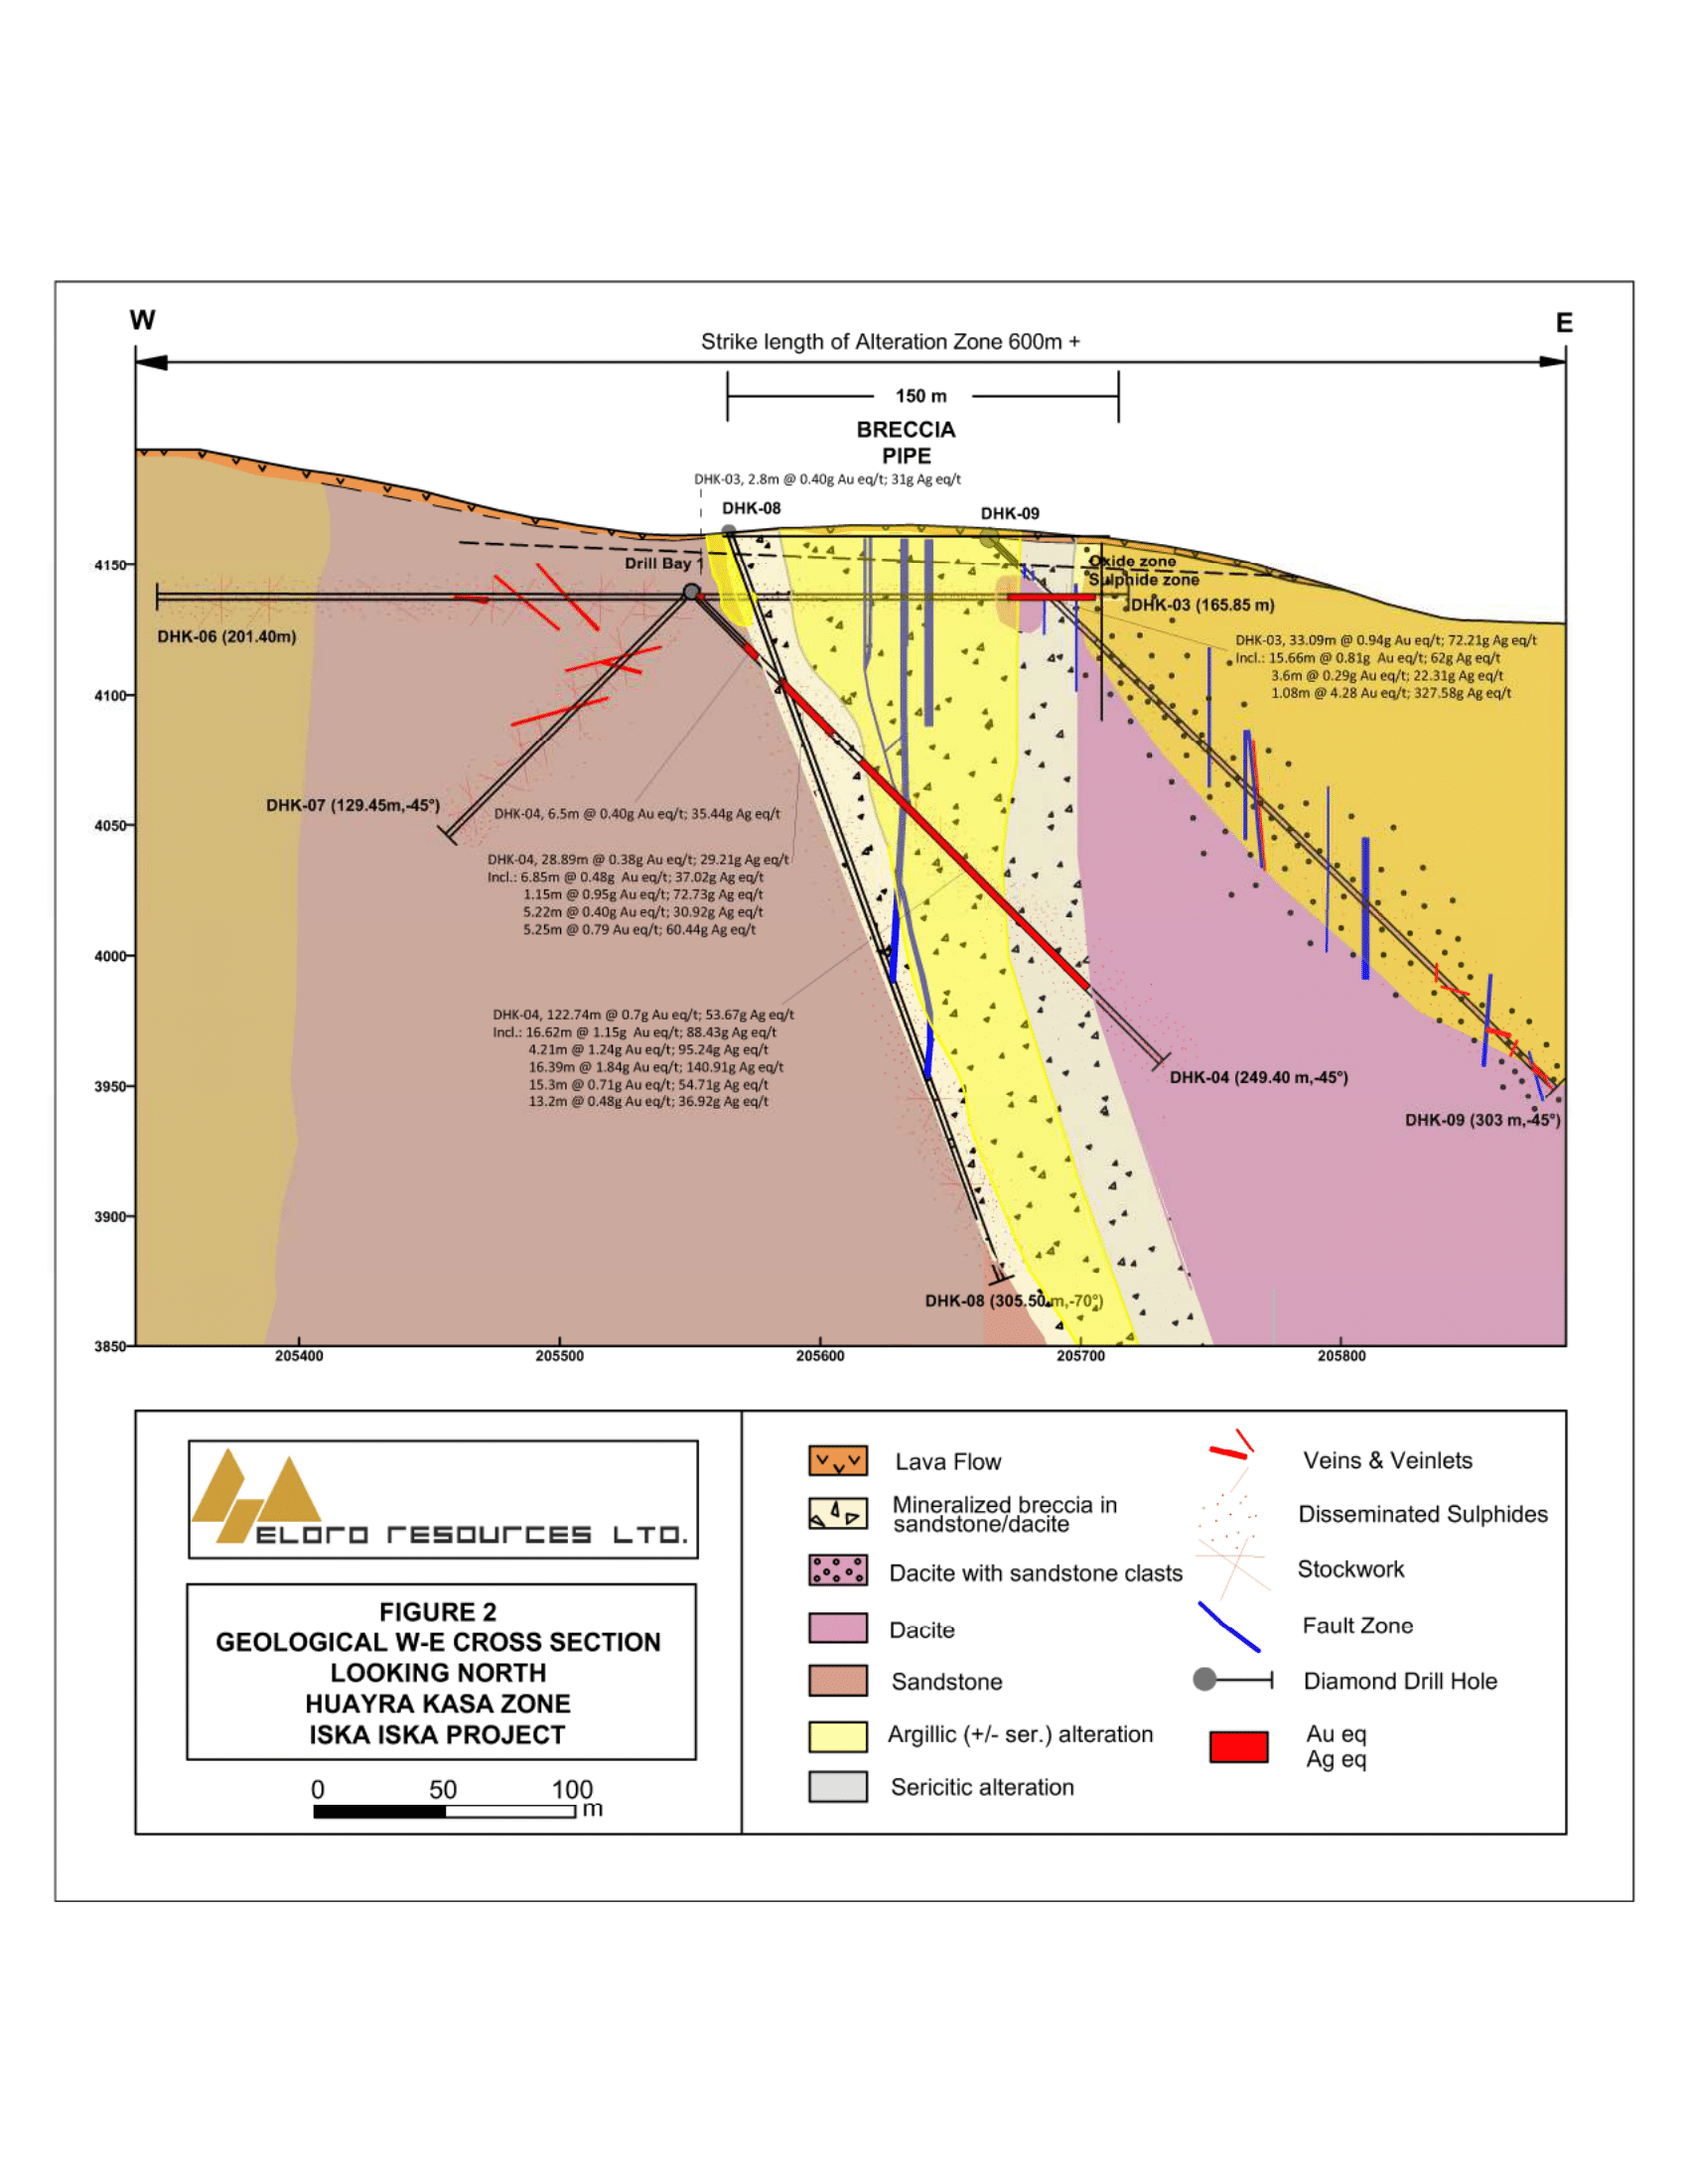 Geological W-E Cross Section, looking north, Huayra Kasa Zone, Iska Iska Project